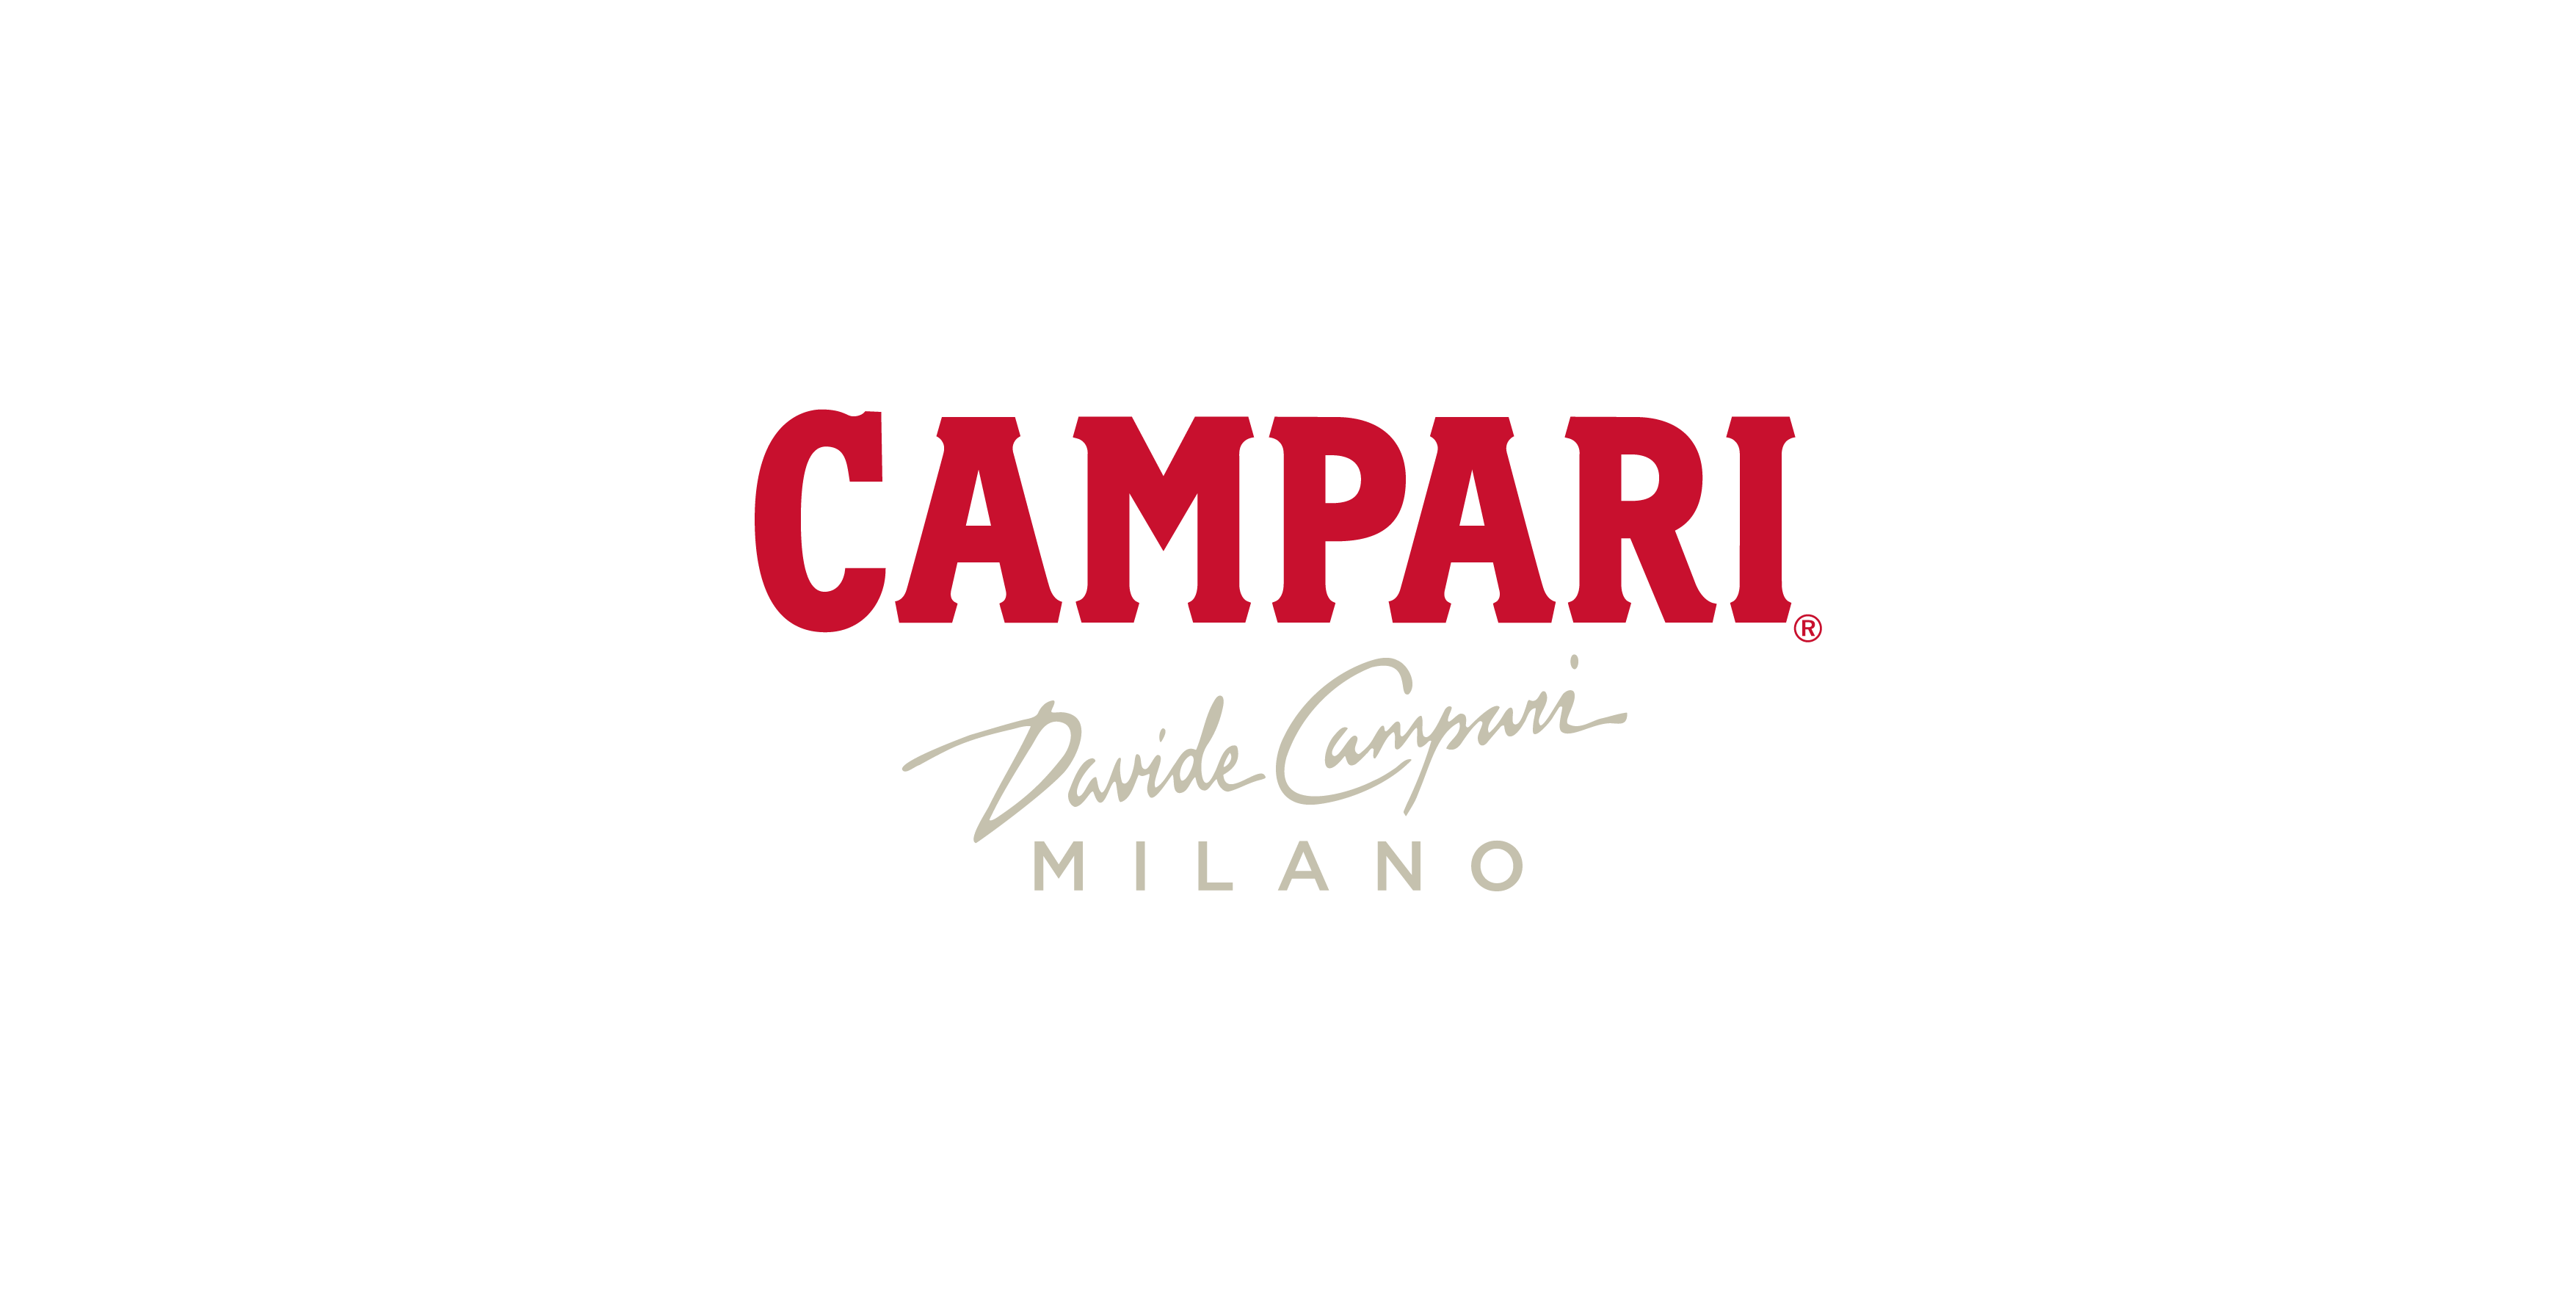 Milano HouseofCampari eventoImgAzienda 1